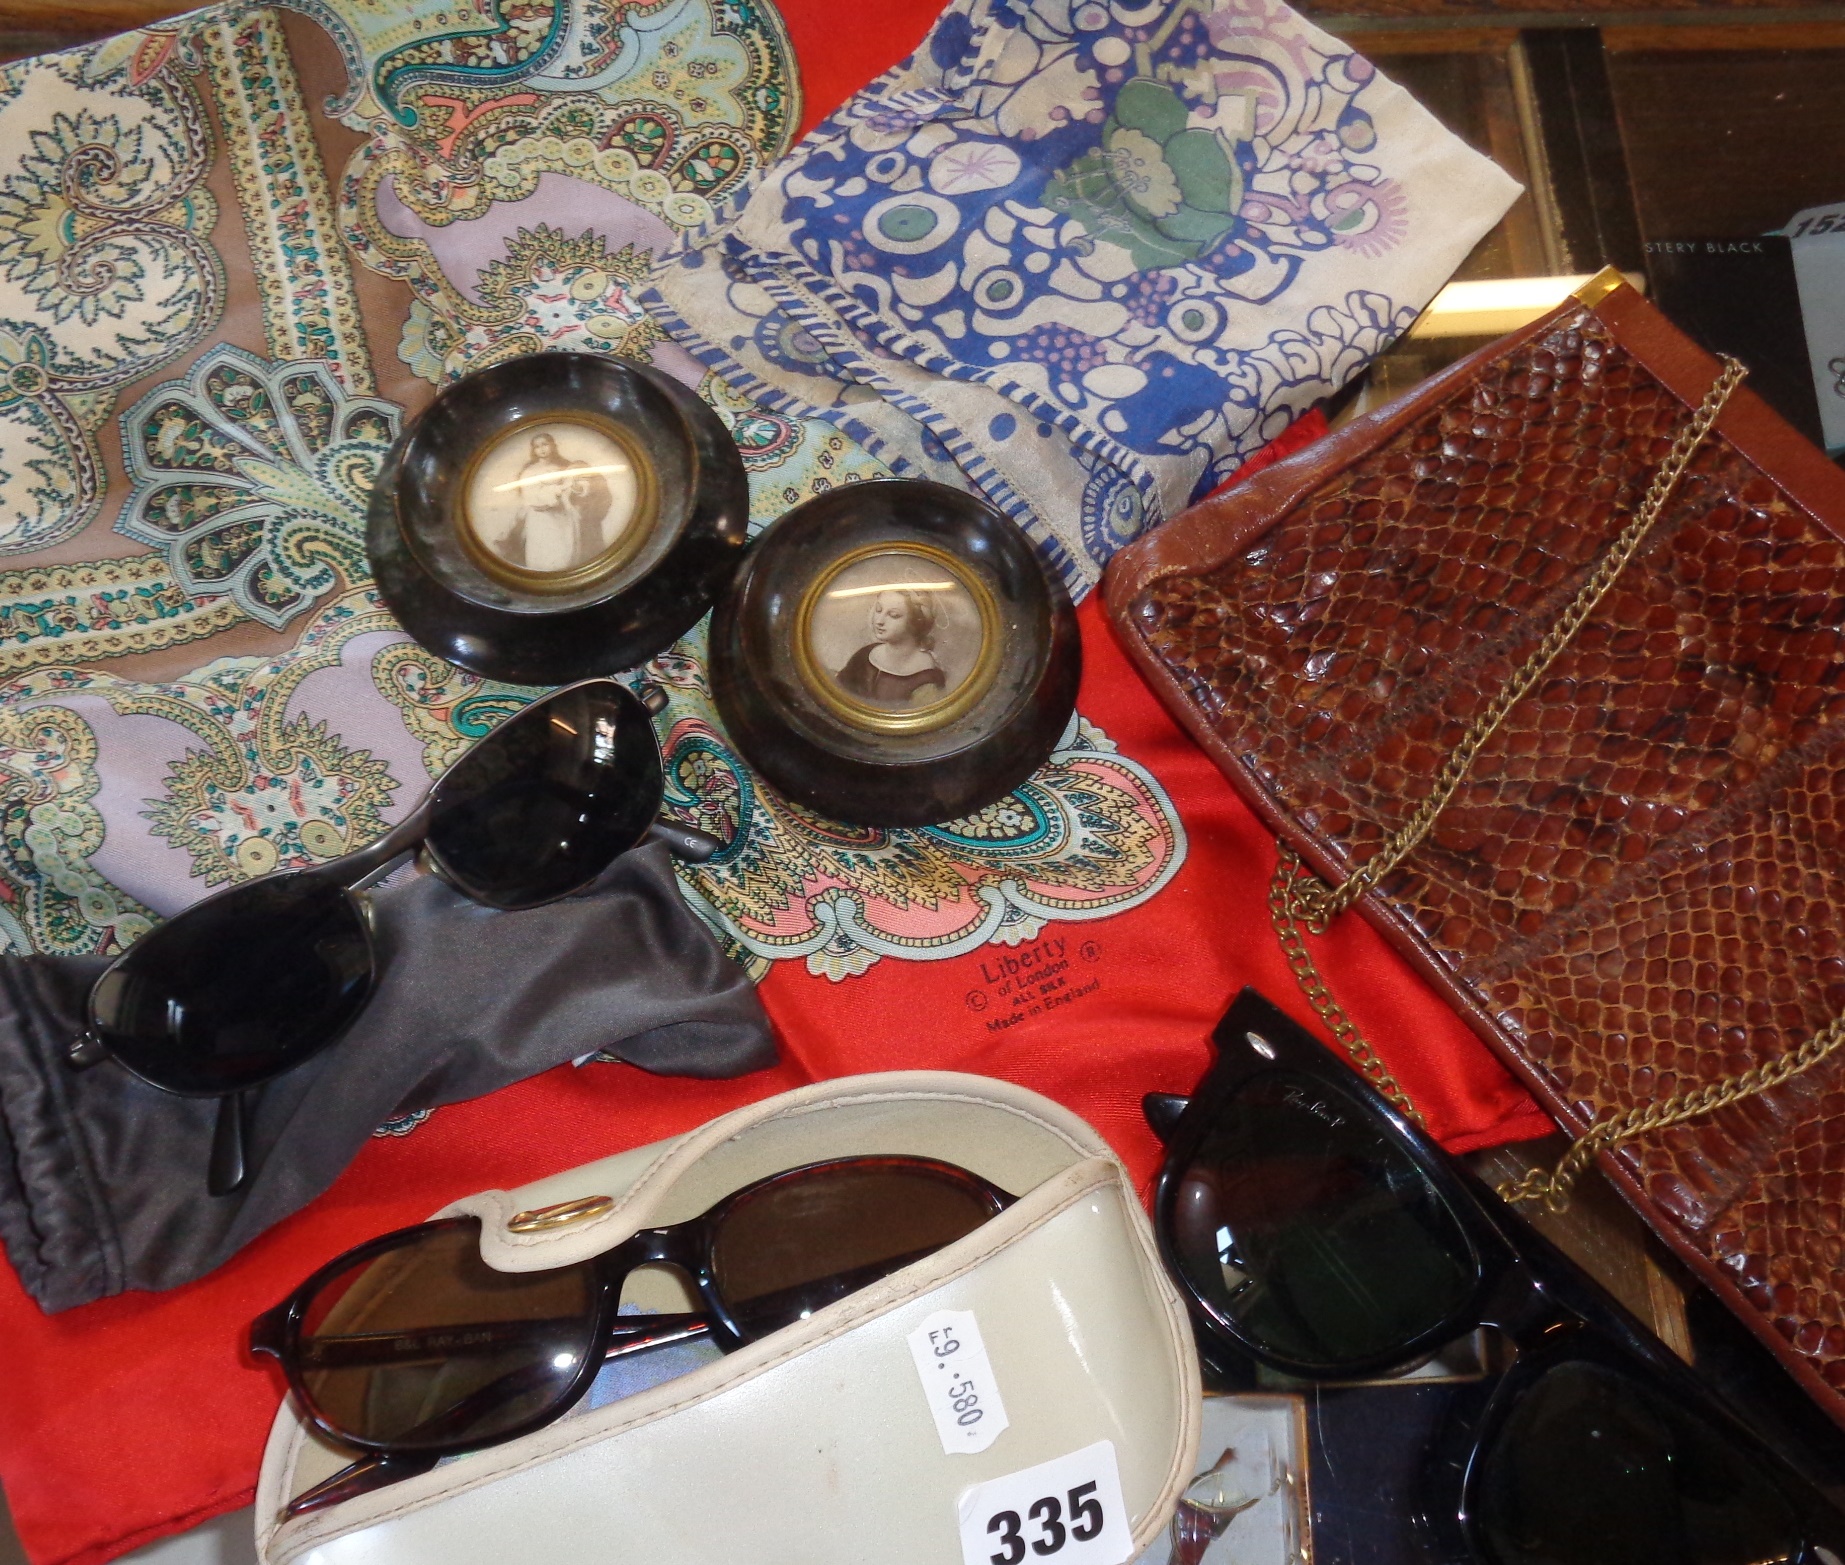 Vintage Ray Ban sunglasses, Liberty silk paisley scarf, Snakeskin handbag, etc.